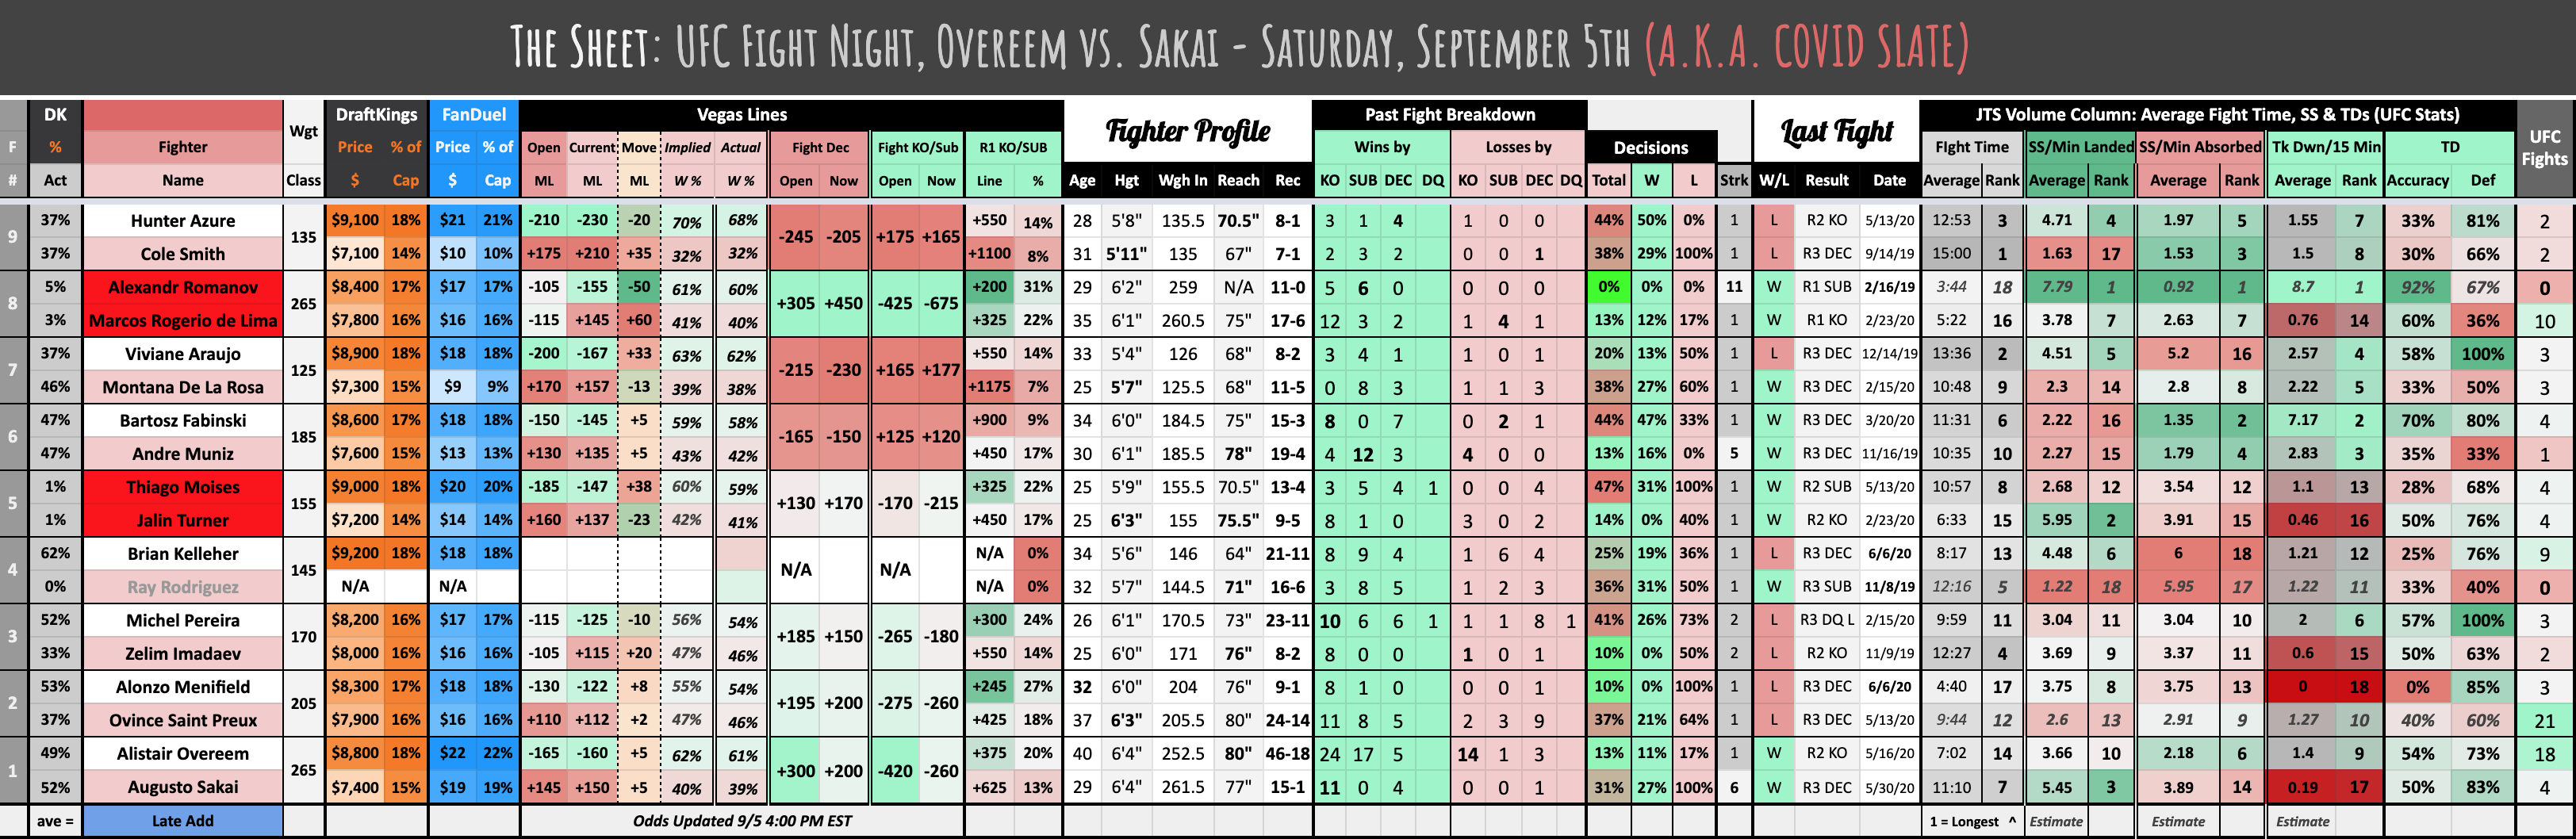 The Sheet: UFC Fight Night, Overeem vs. Sakai - Saturday, September 5th